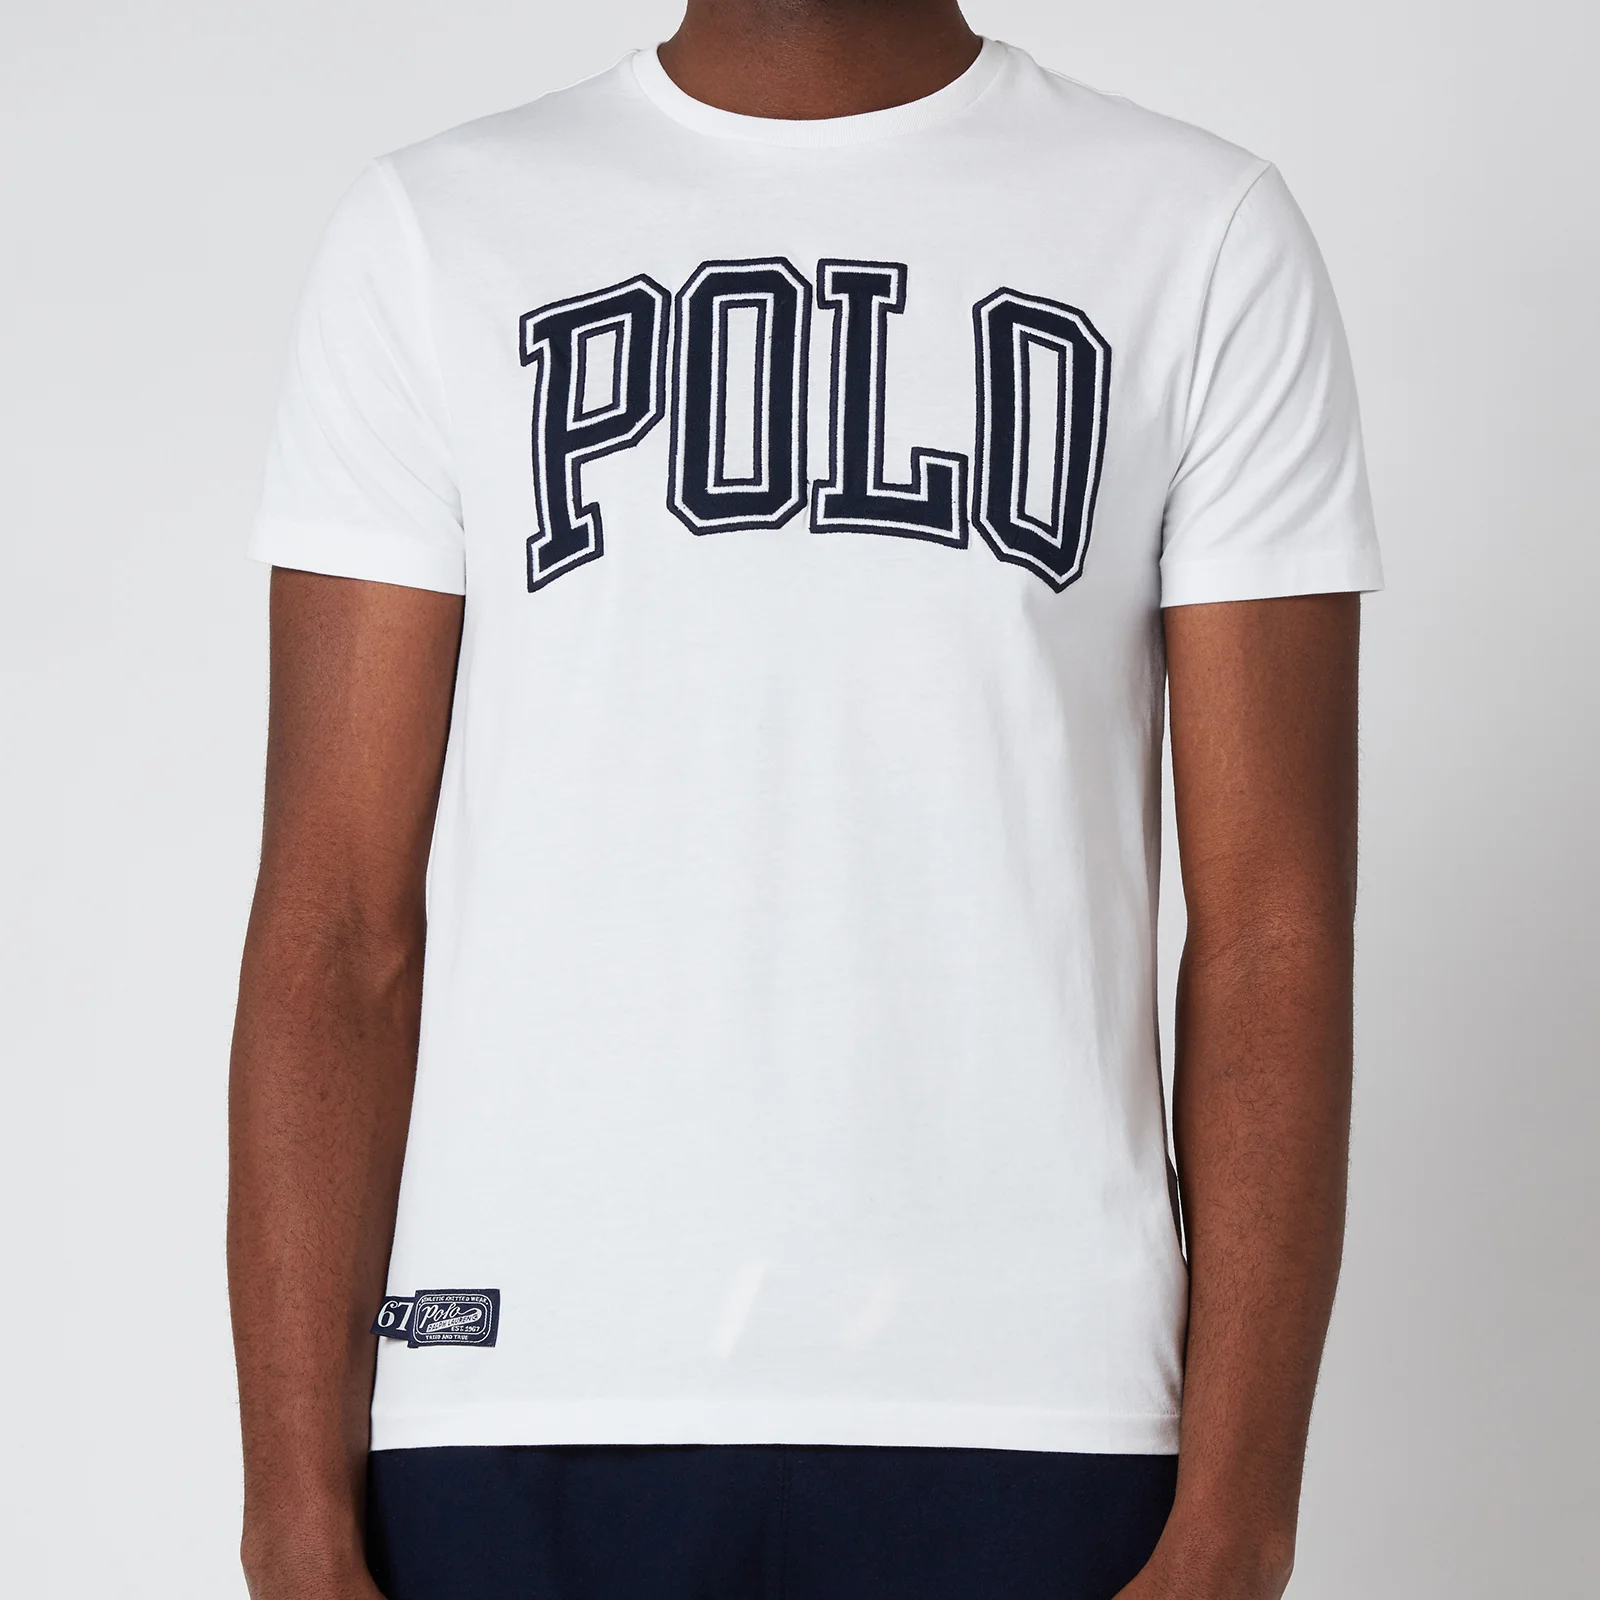 Polo Ralph Lauren Men's Polo Crewneck T-Shirt - White Image 1